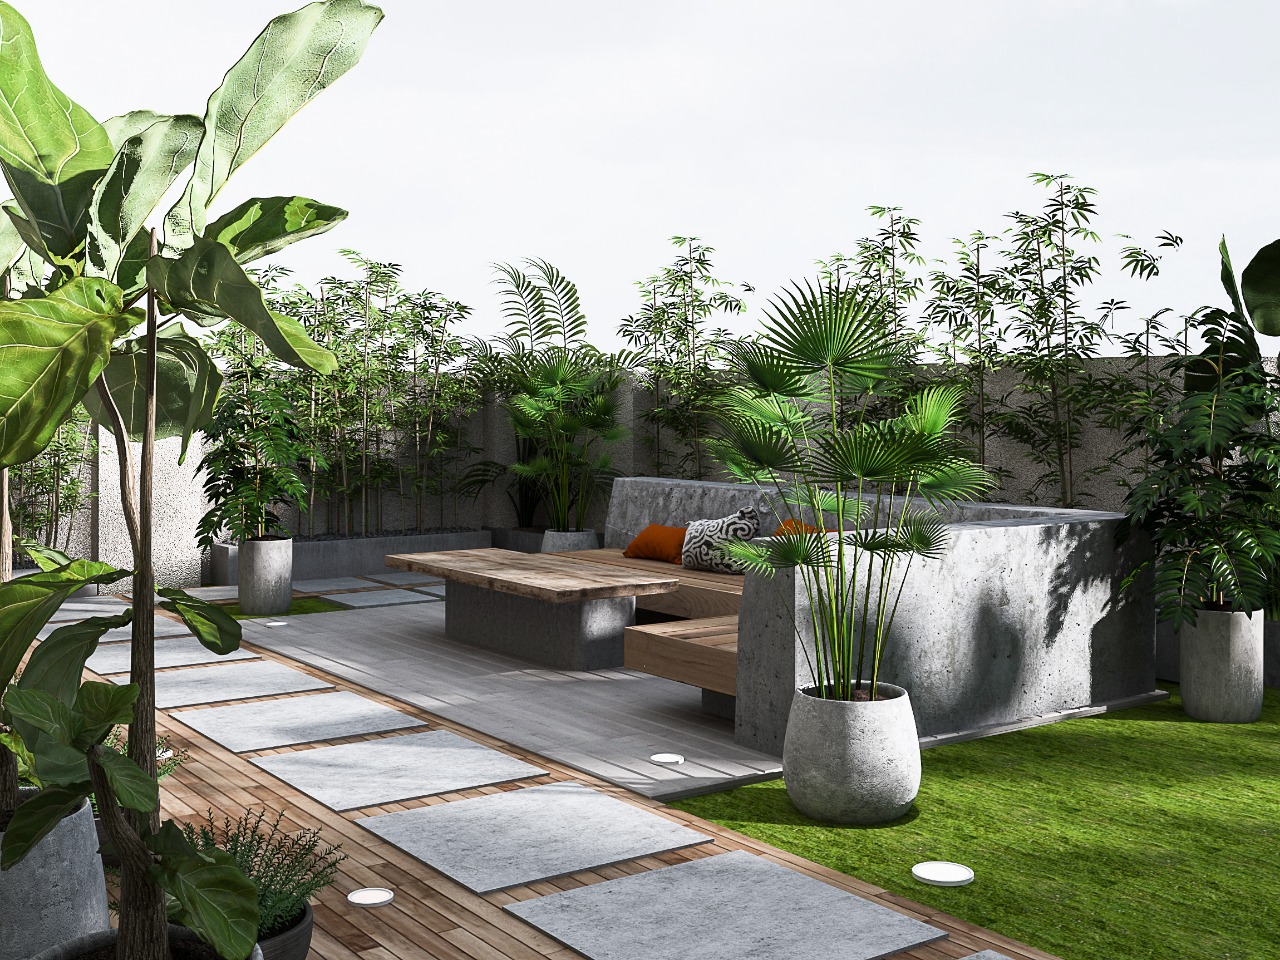 Trusted residential garden designers in Dubai